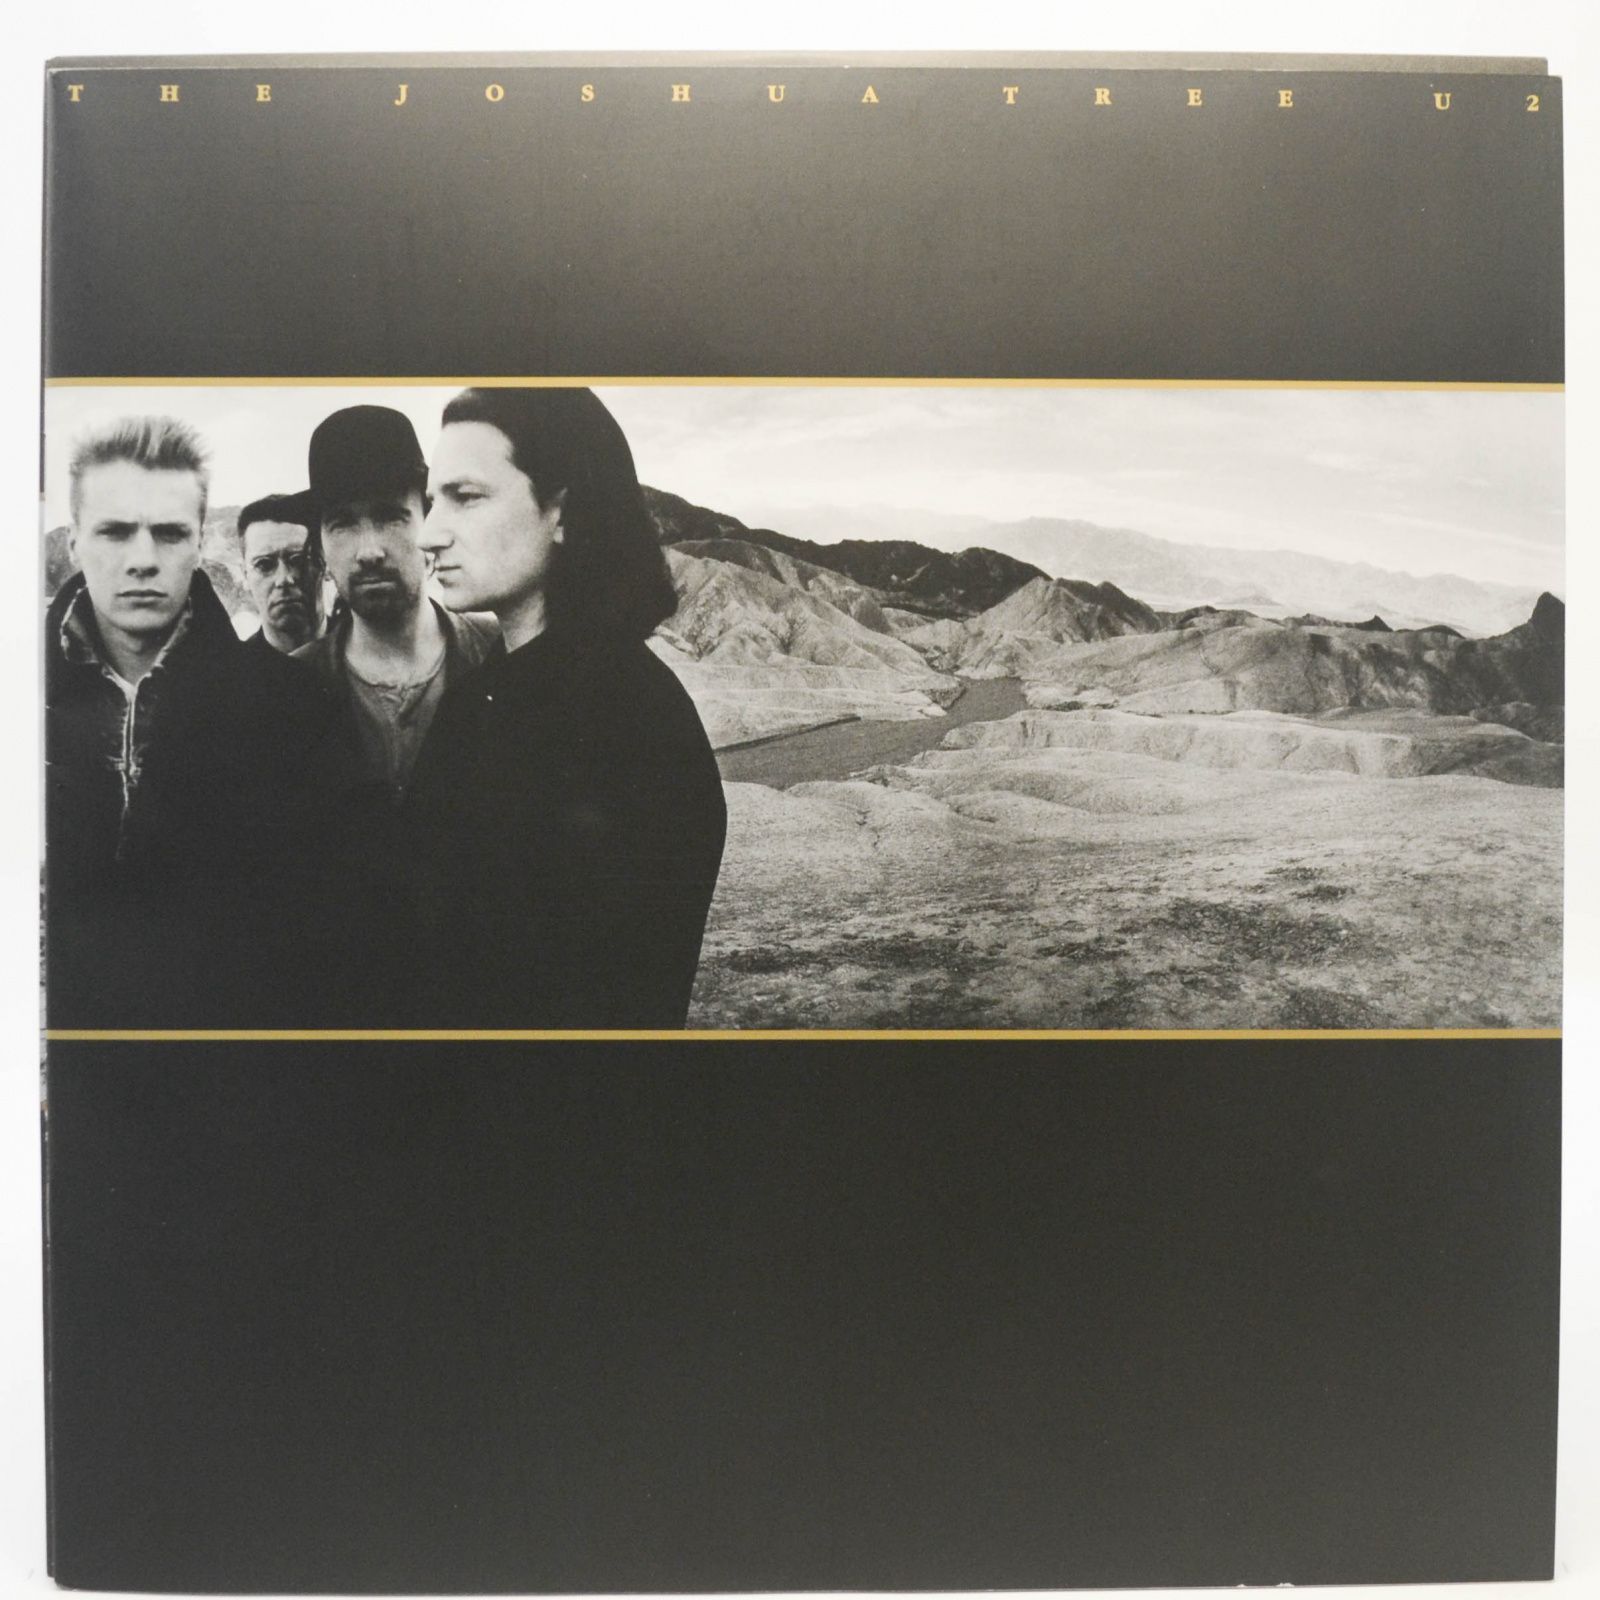 U2 — The Joshua Tree (2LP), 1987